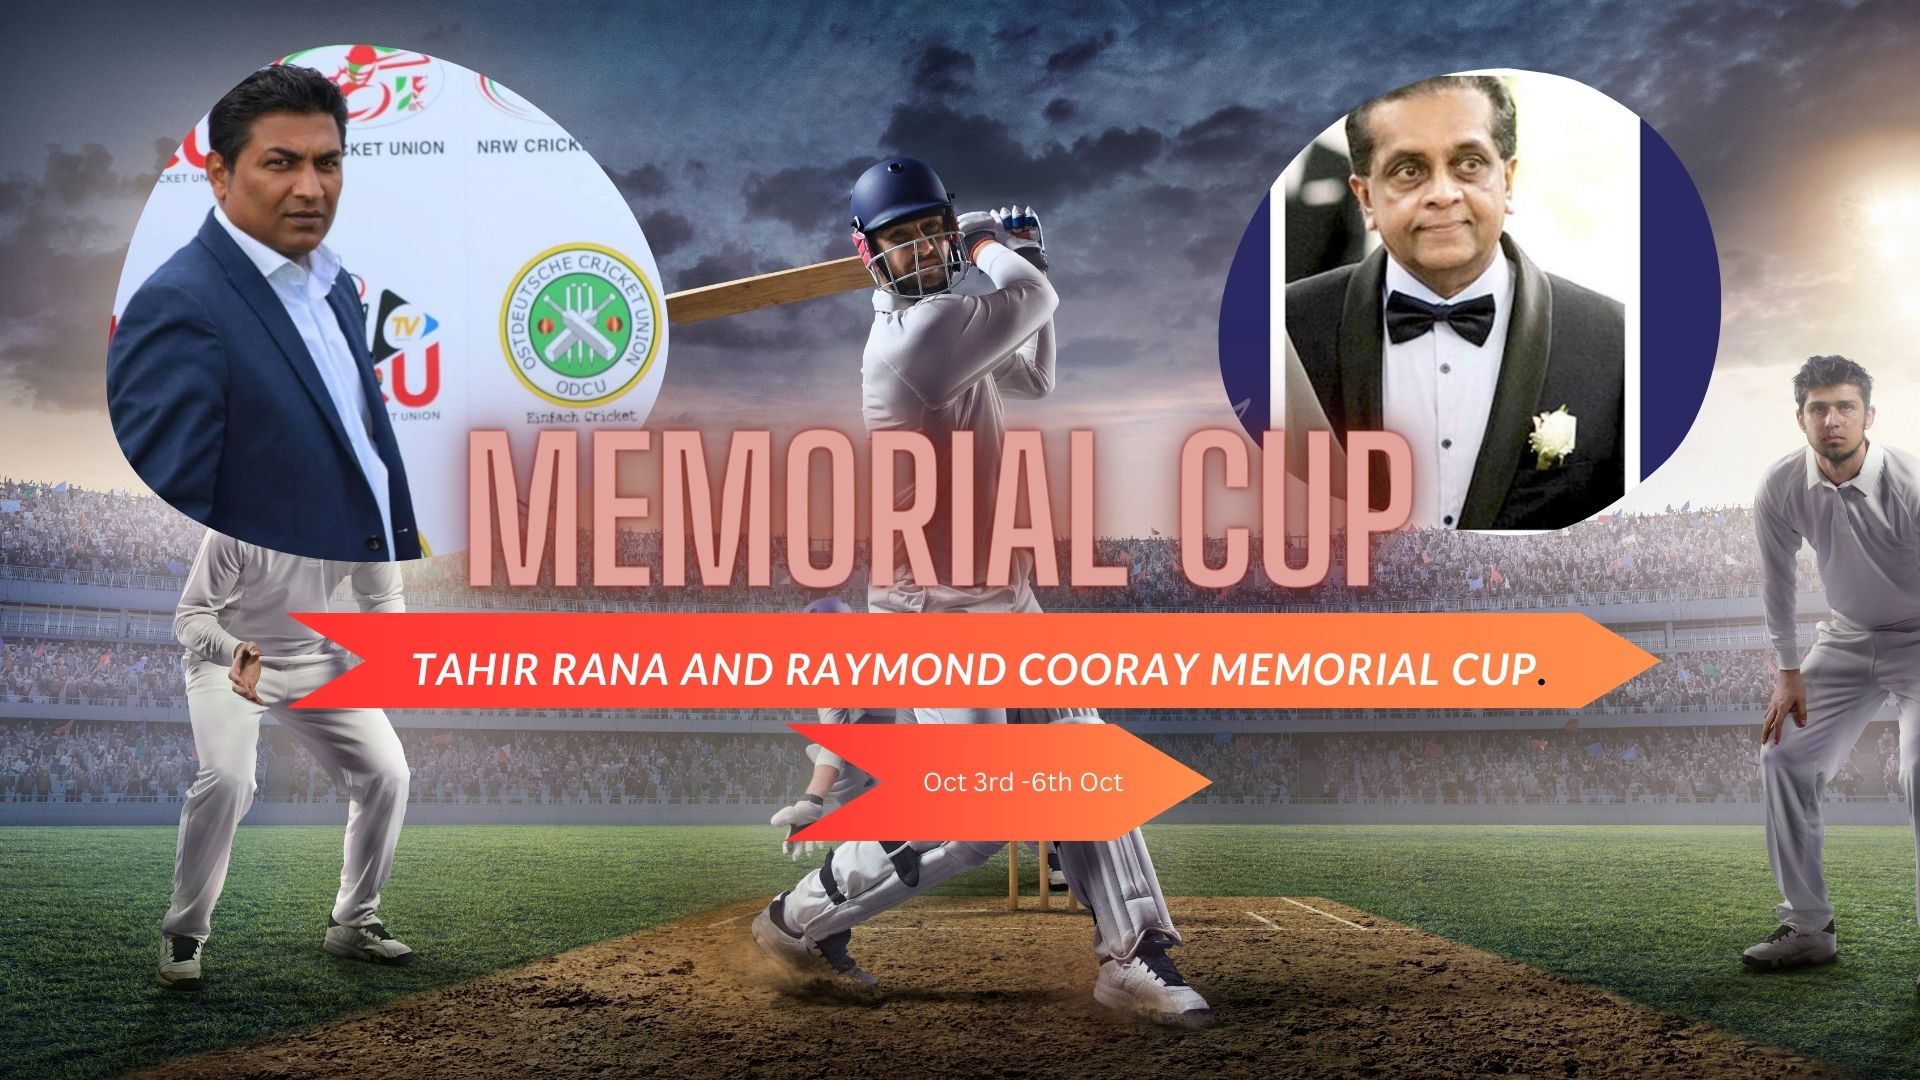 Tahir Rana and Raymond Cooray memorial cup